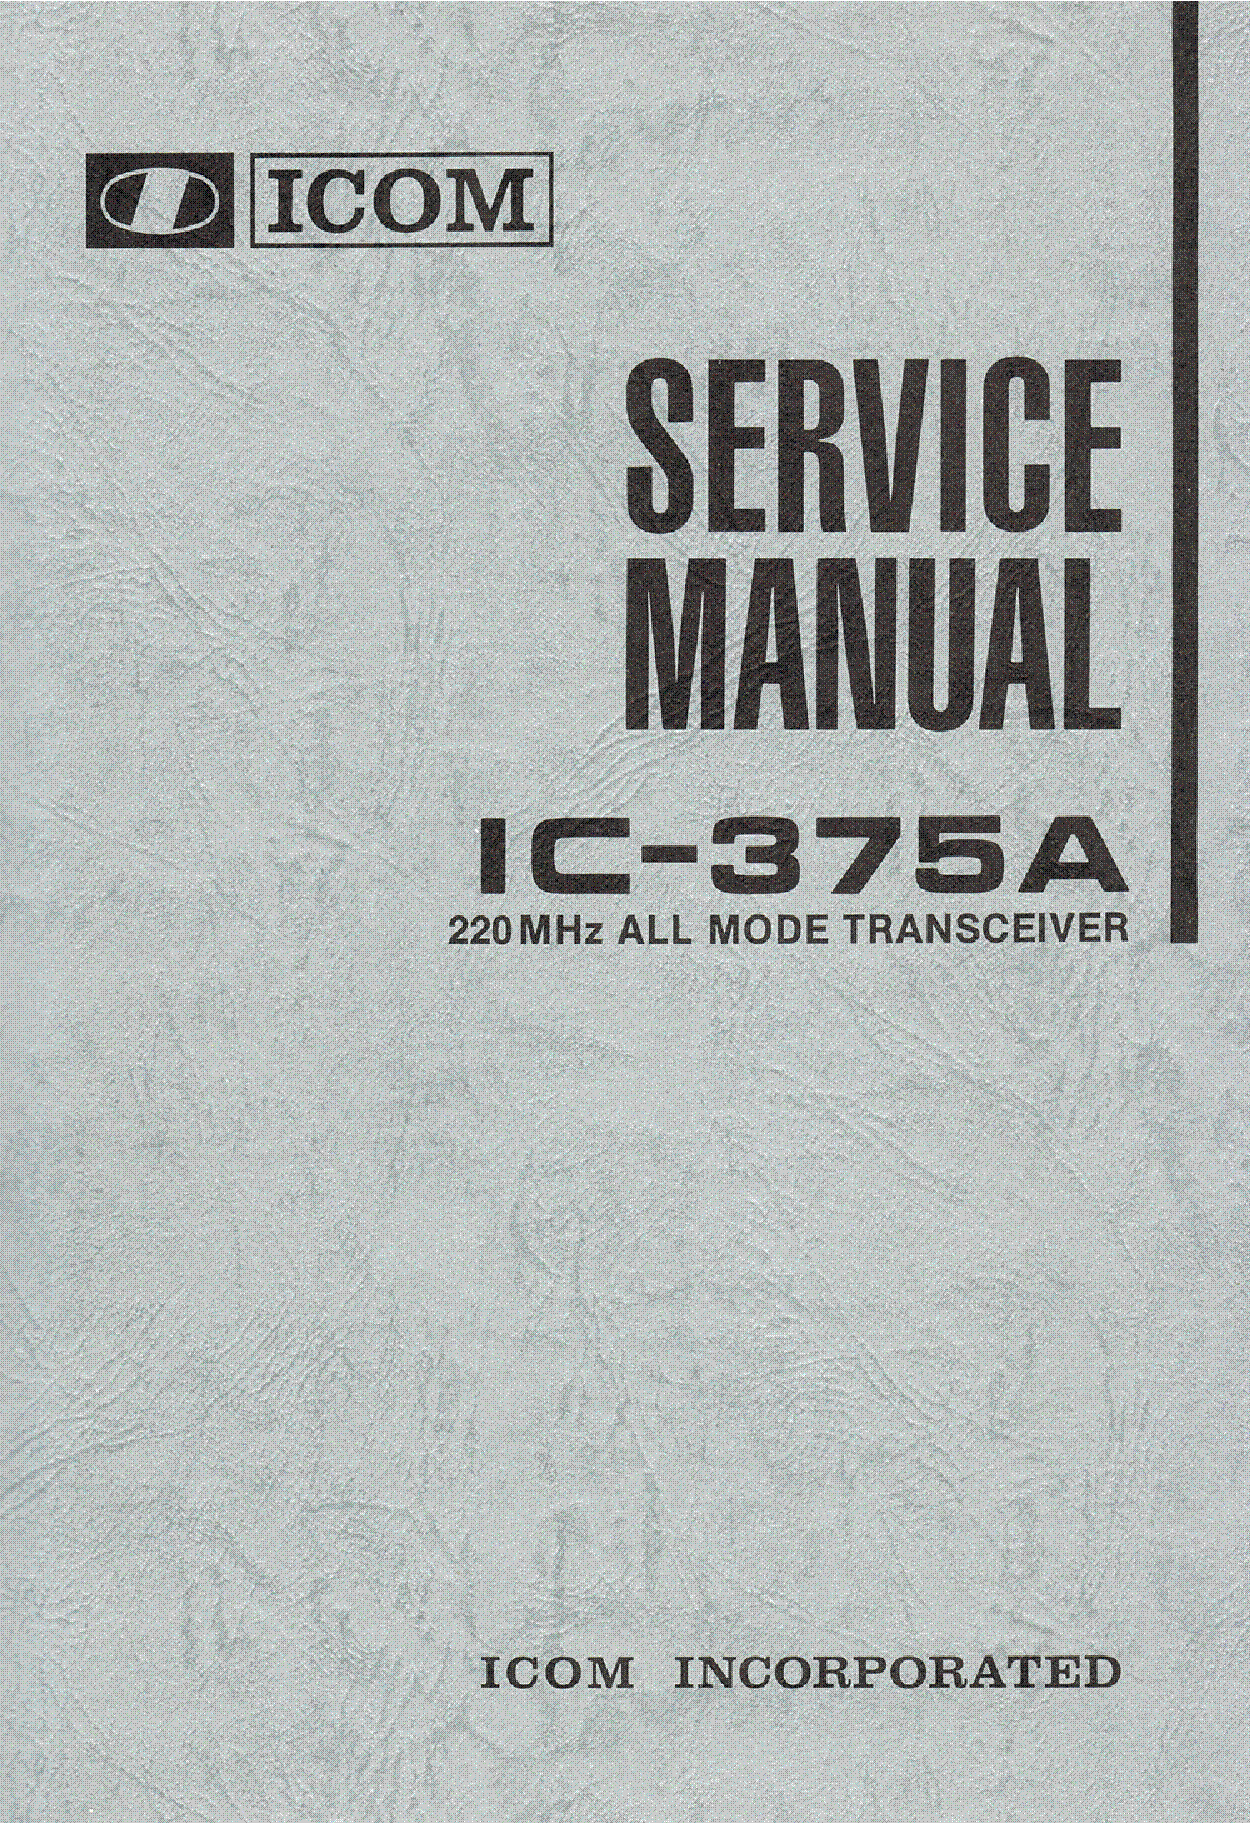 icom service manuals pdf